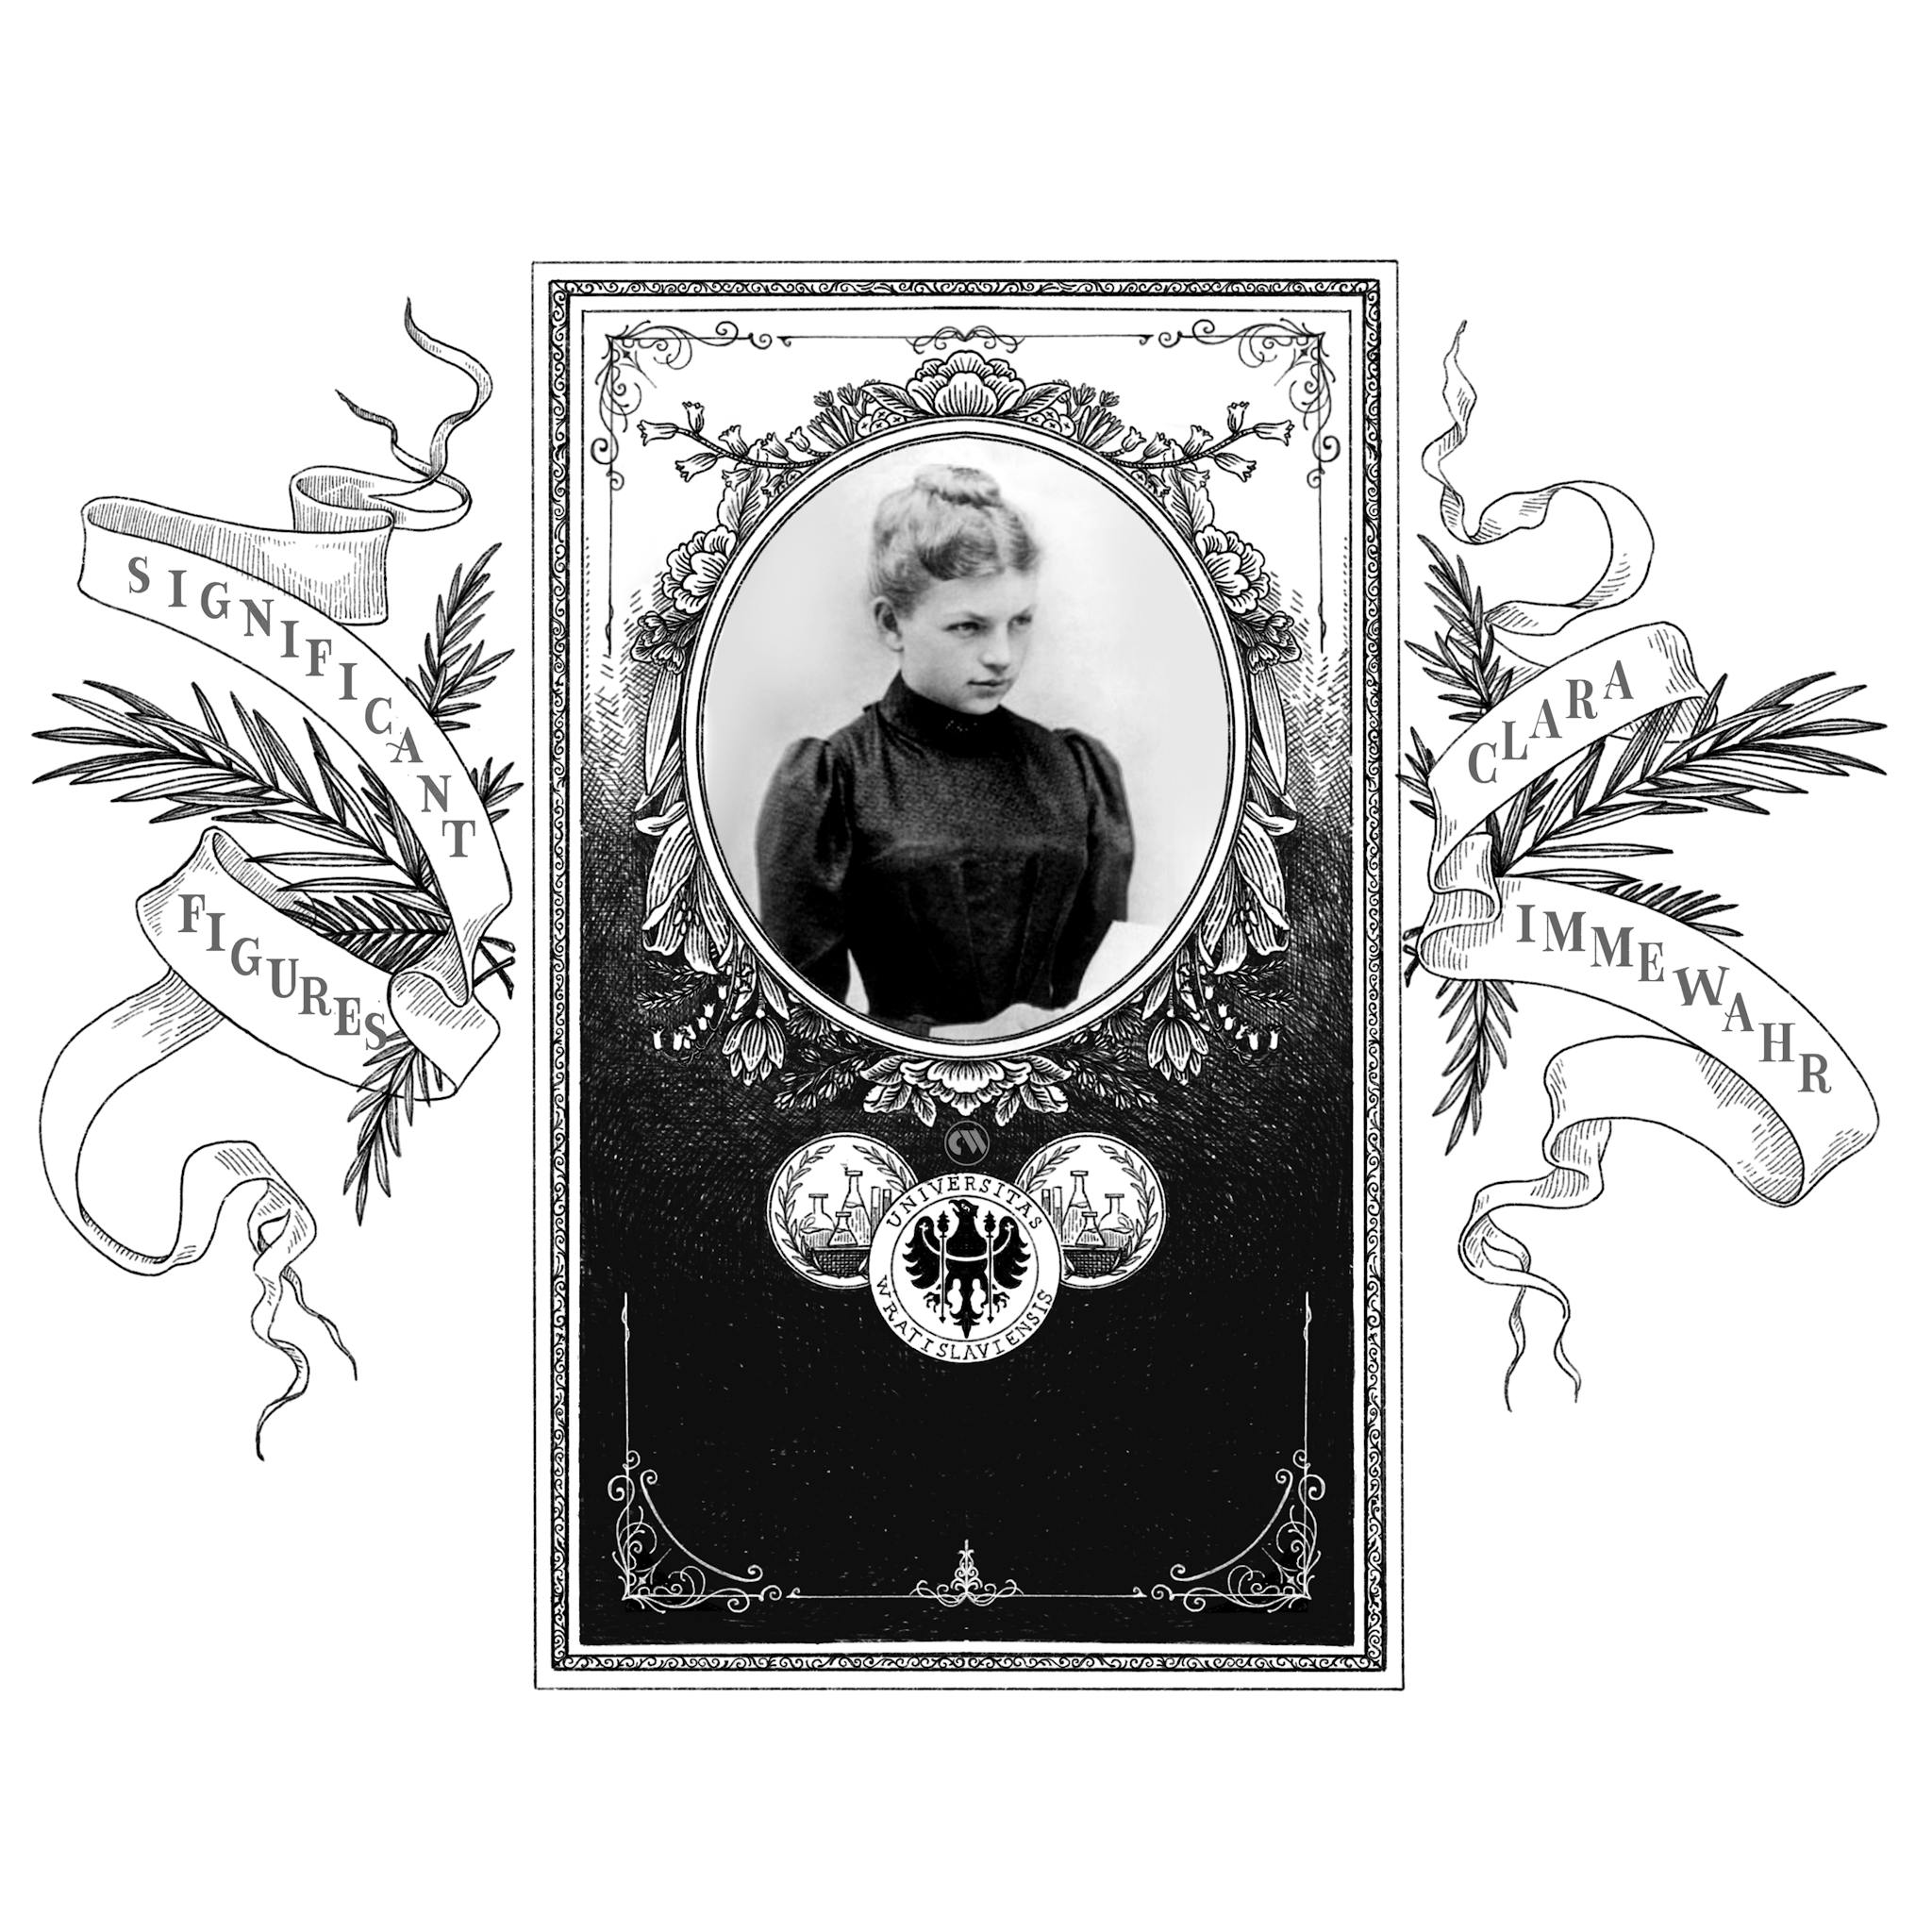 Illustrated frame with Clara Immewahr portrait.